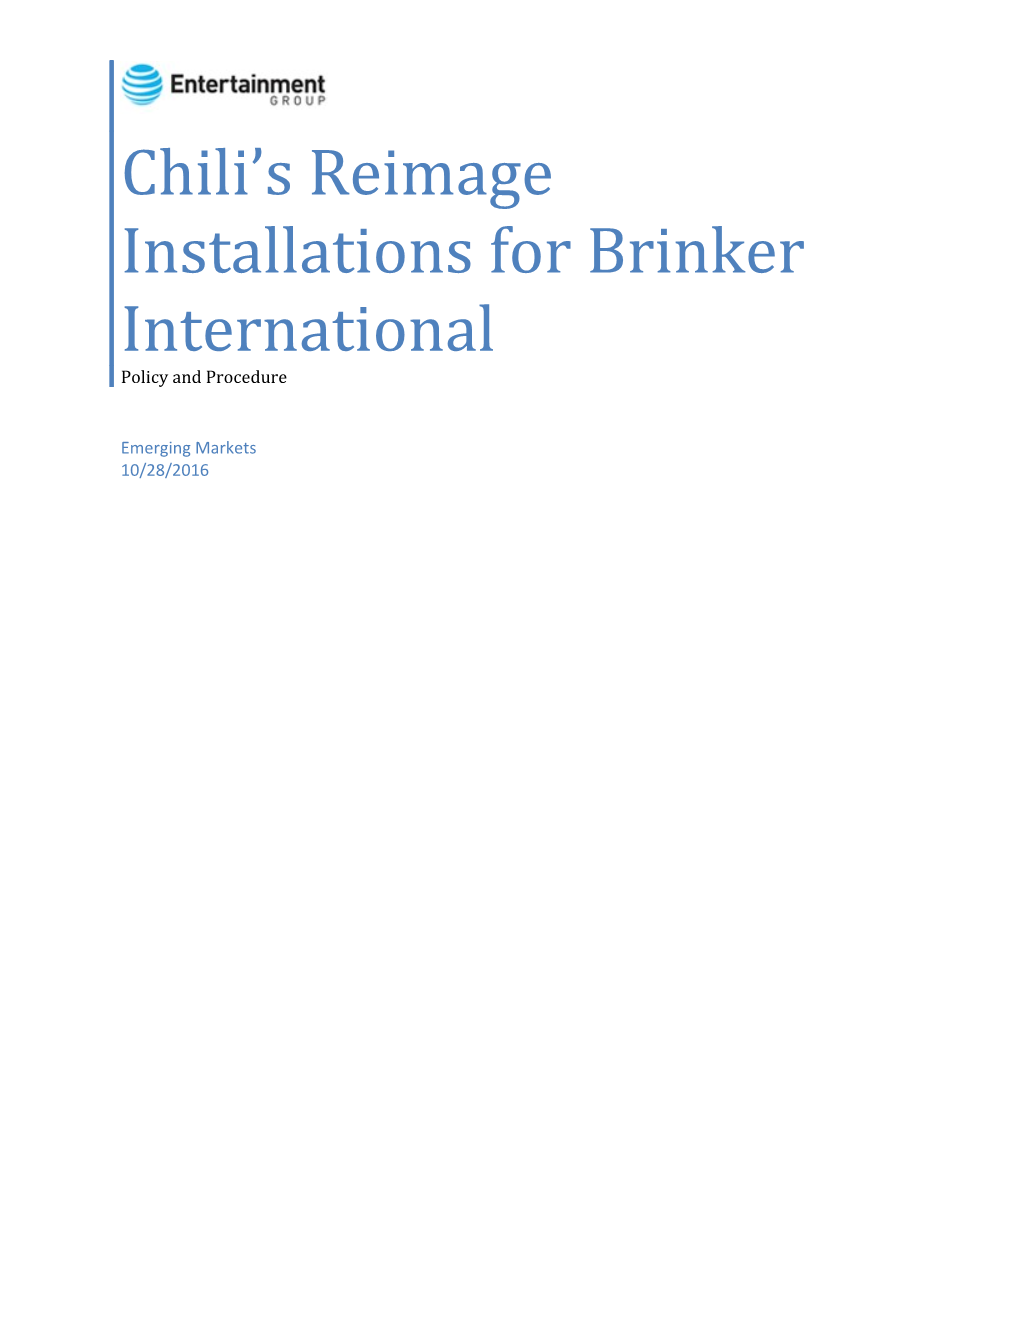 Chili S Reimage Installations for Brinker International